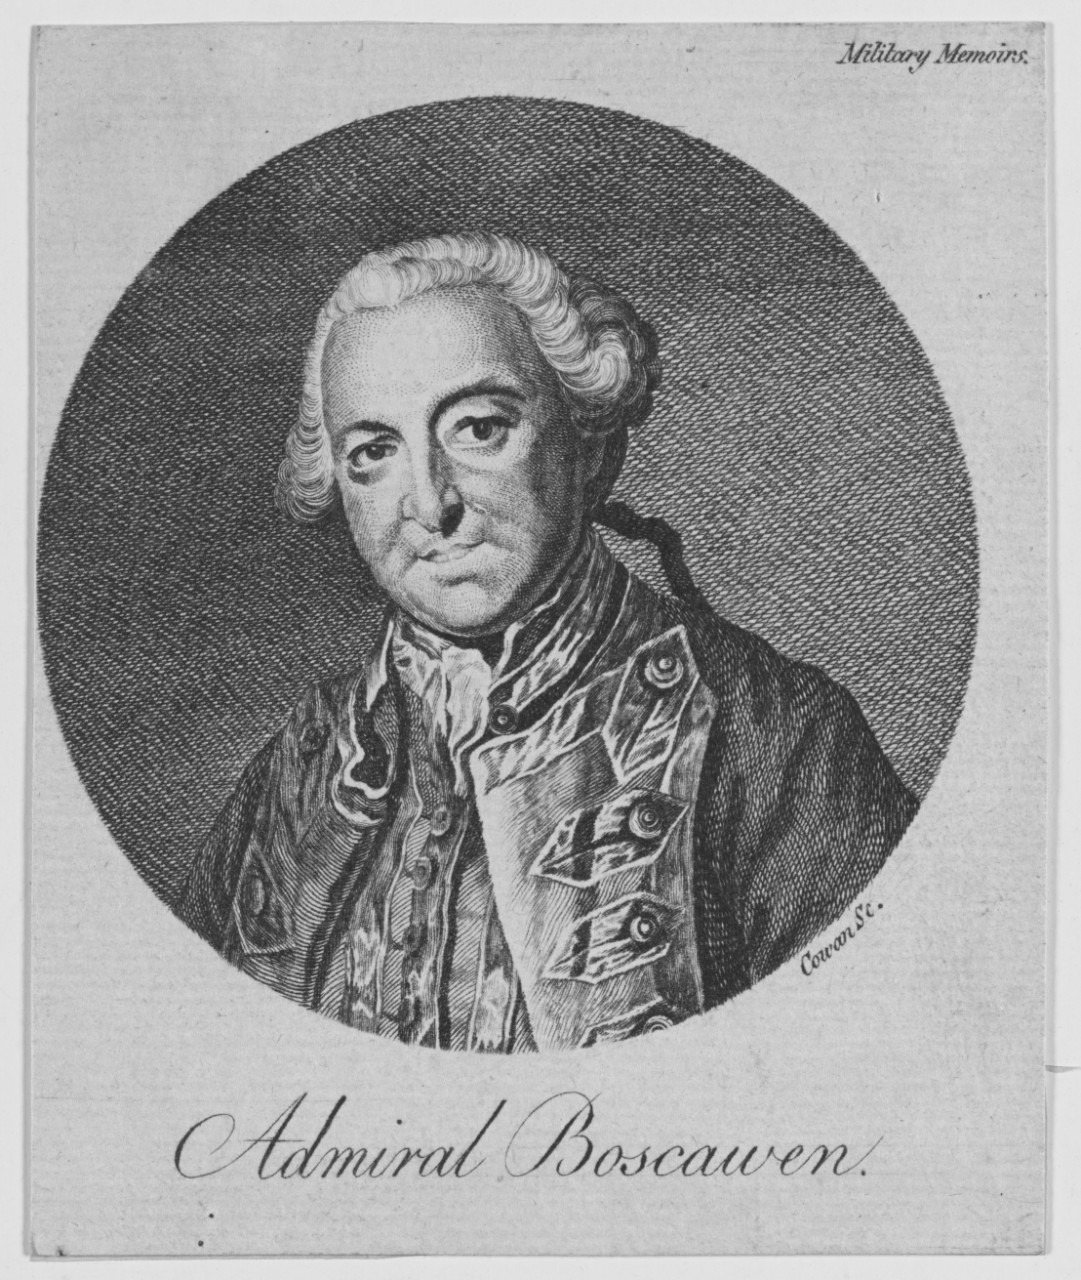 Admiral Boscawen